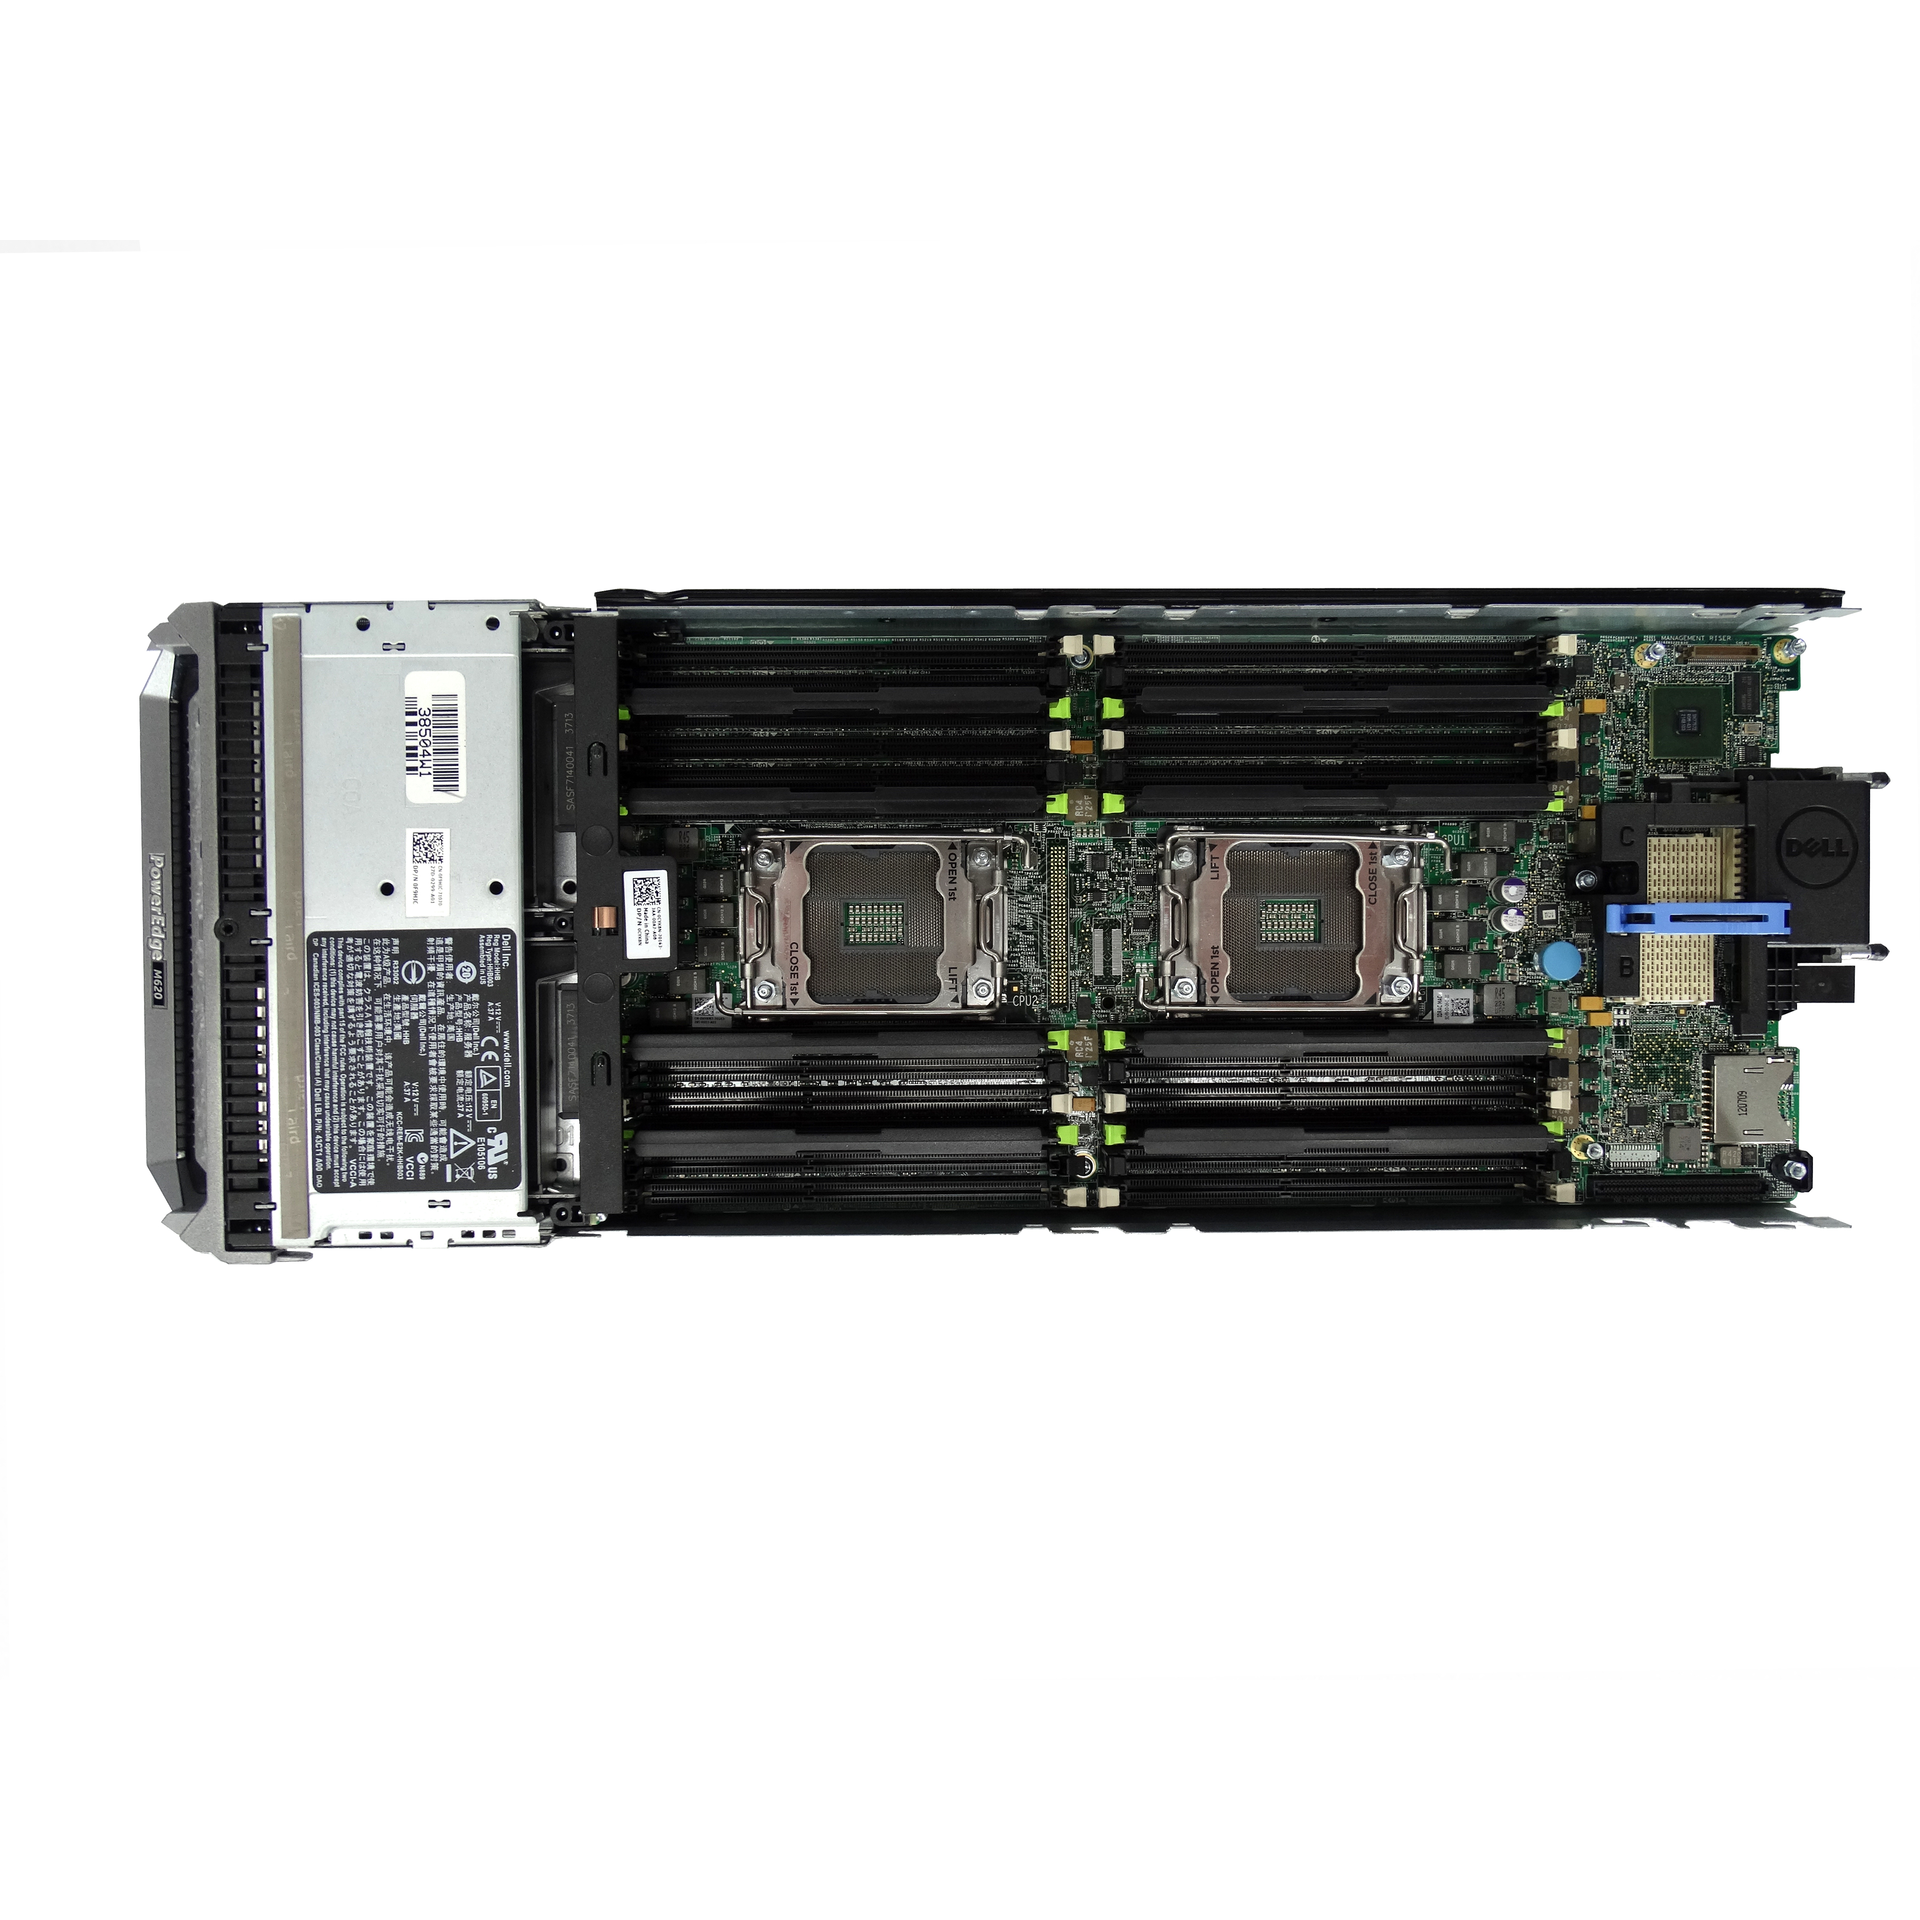 Блейд-сервер DELL PowerEdge M620, 2 процессора Intel 10C E5-2680v2 2.80GHz, 64GB DRAM, PERC H310, 2x10Gb 57810-k